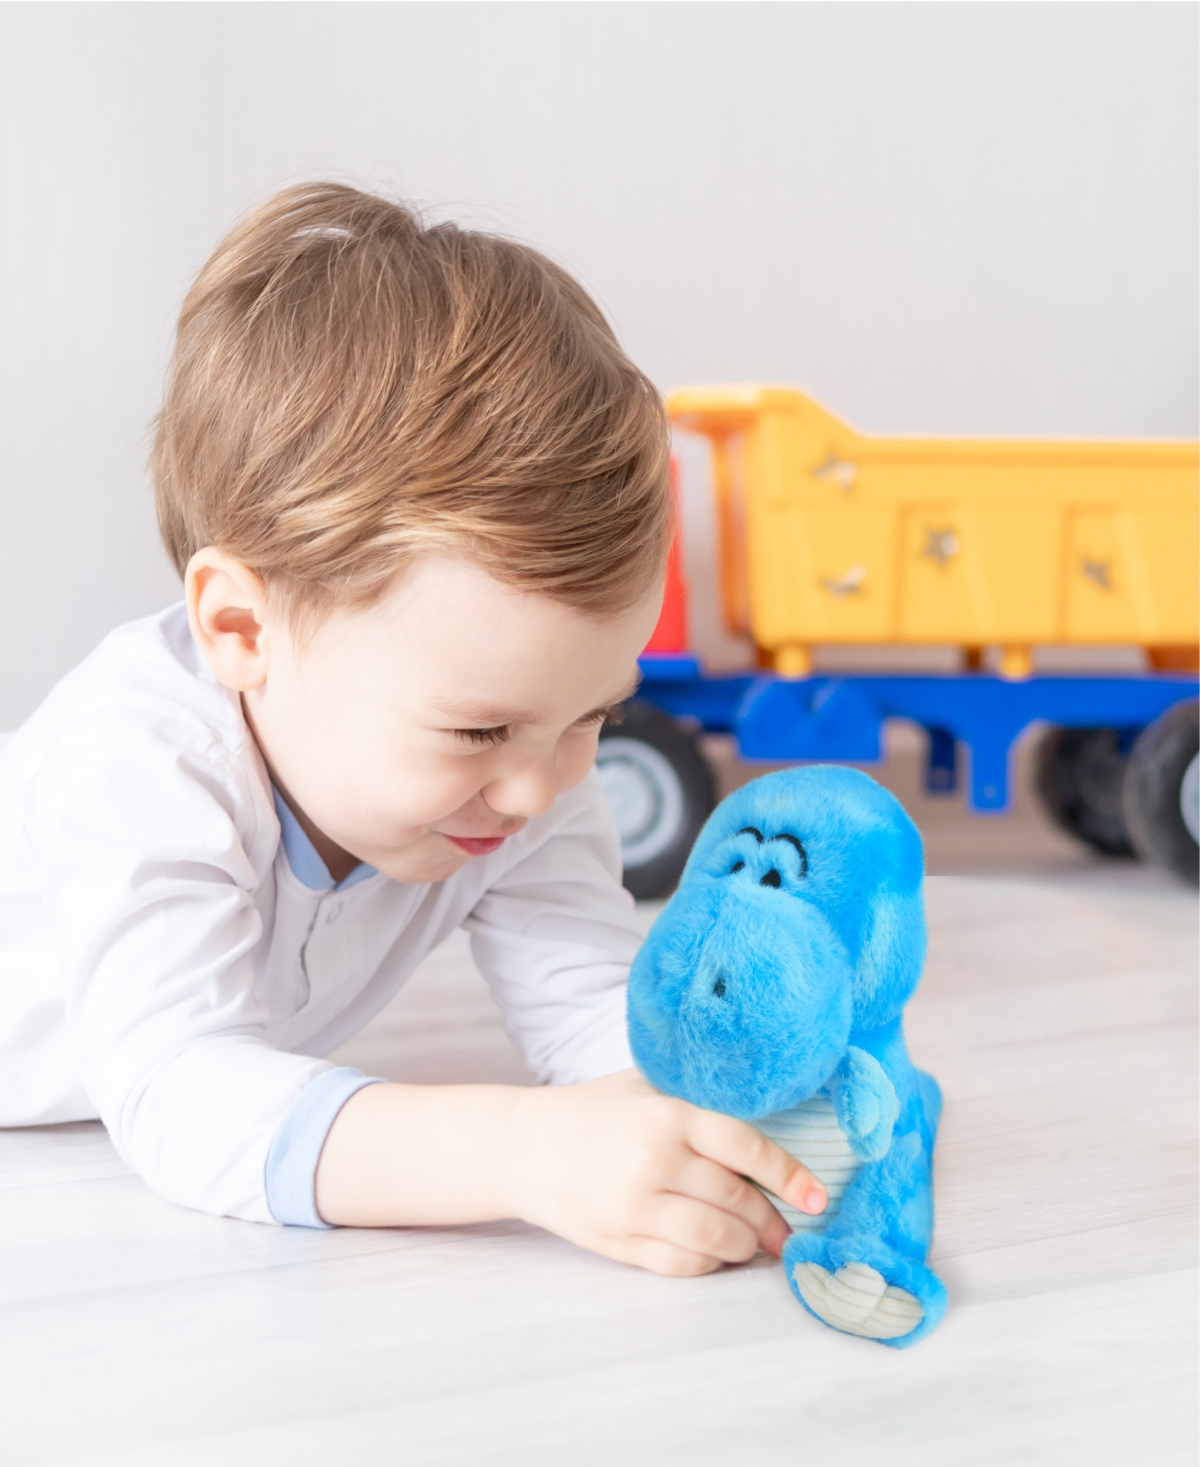 Shop Geoffrey's Toy Box 9" Plush T-rex In Blue